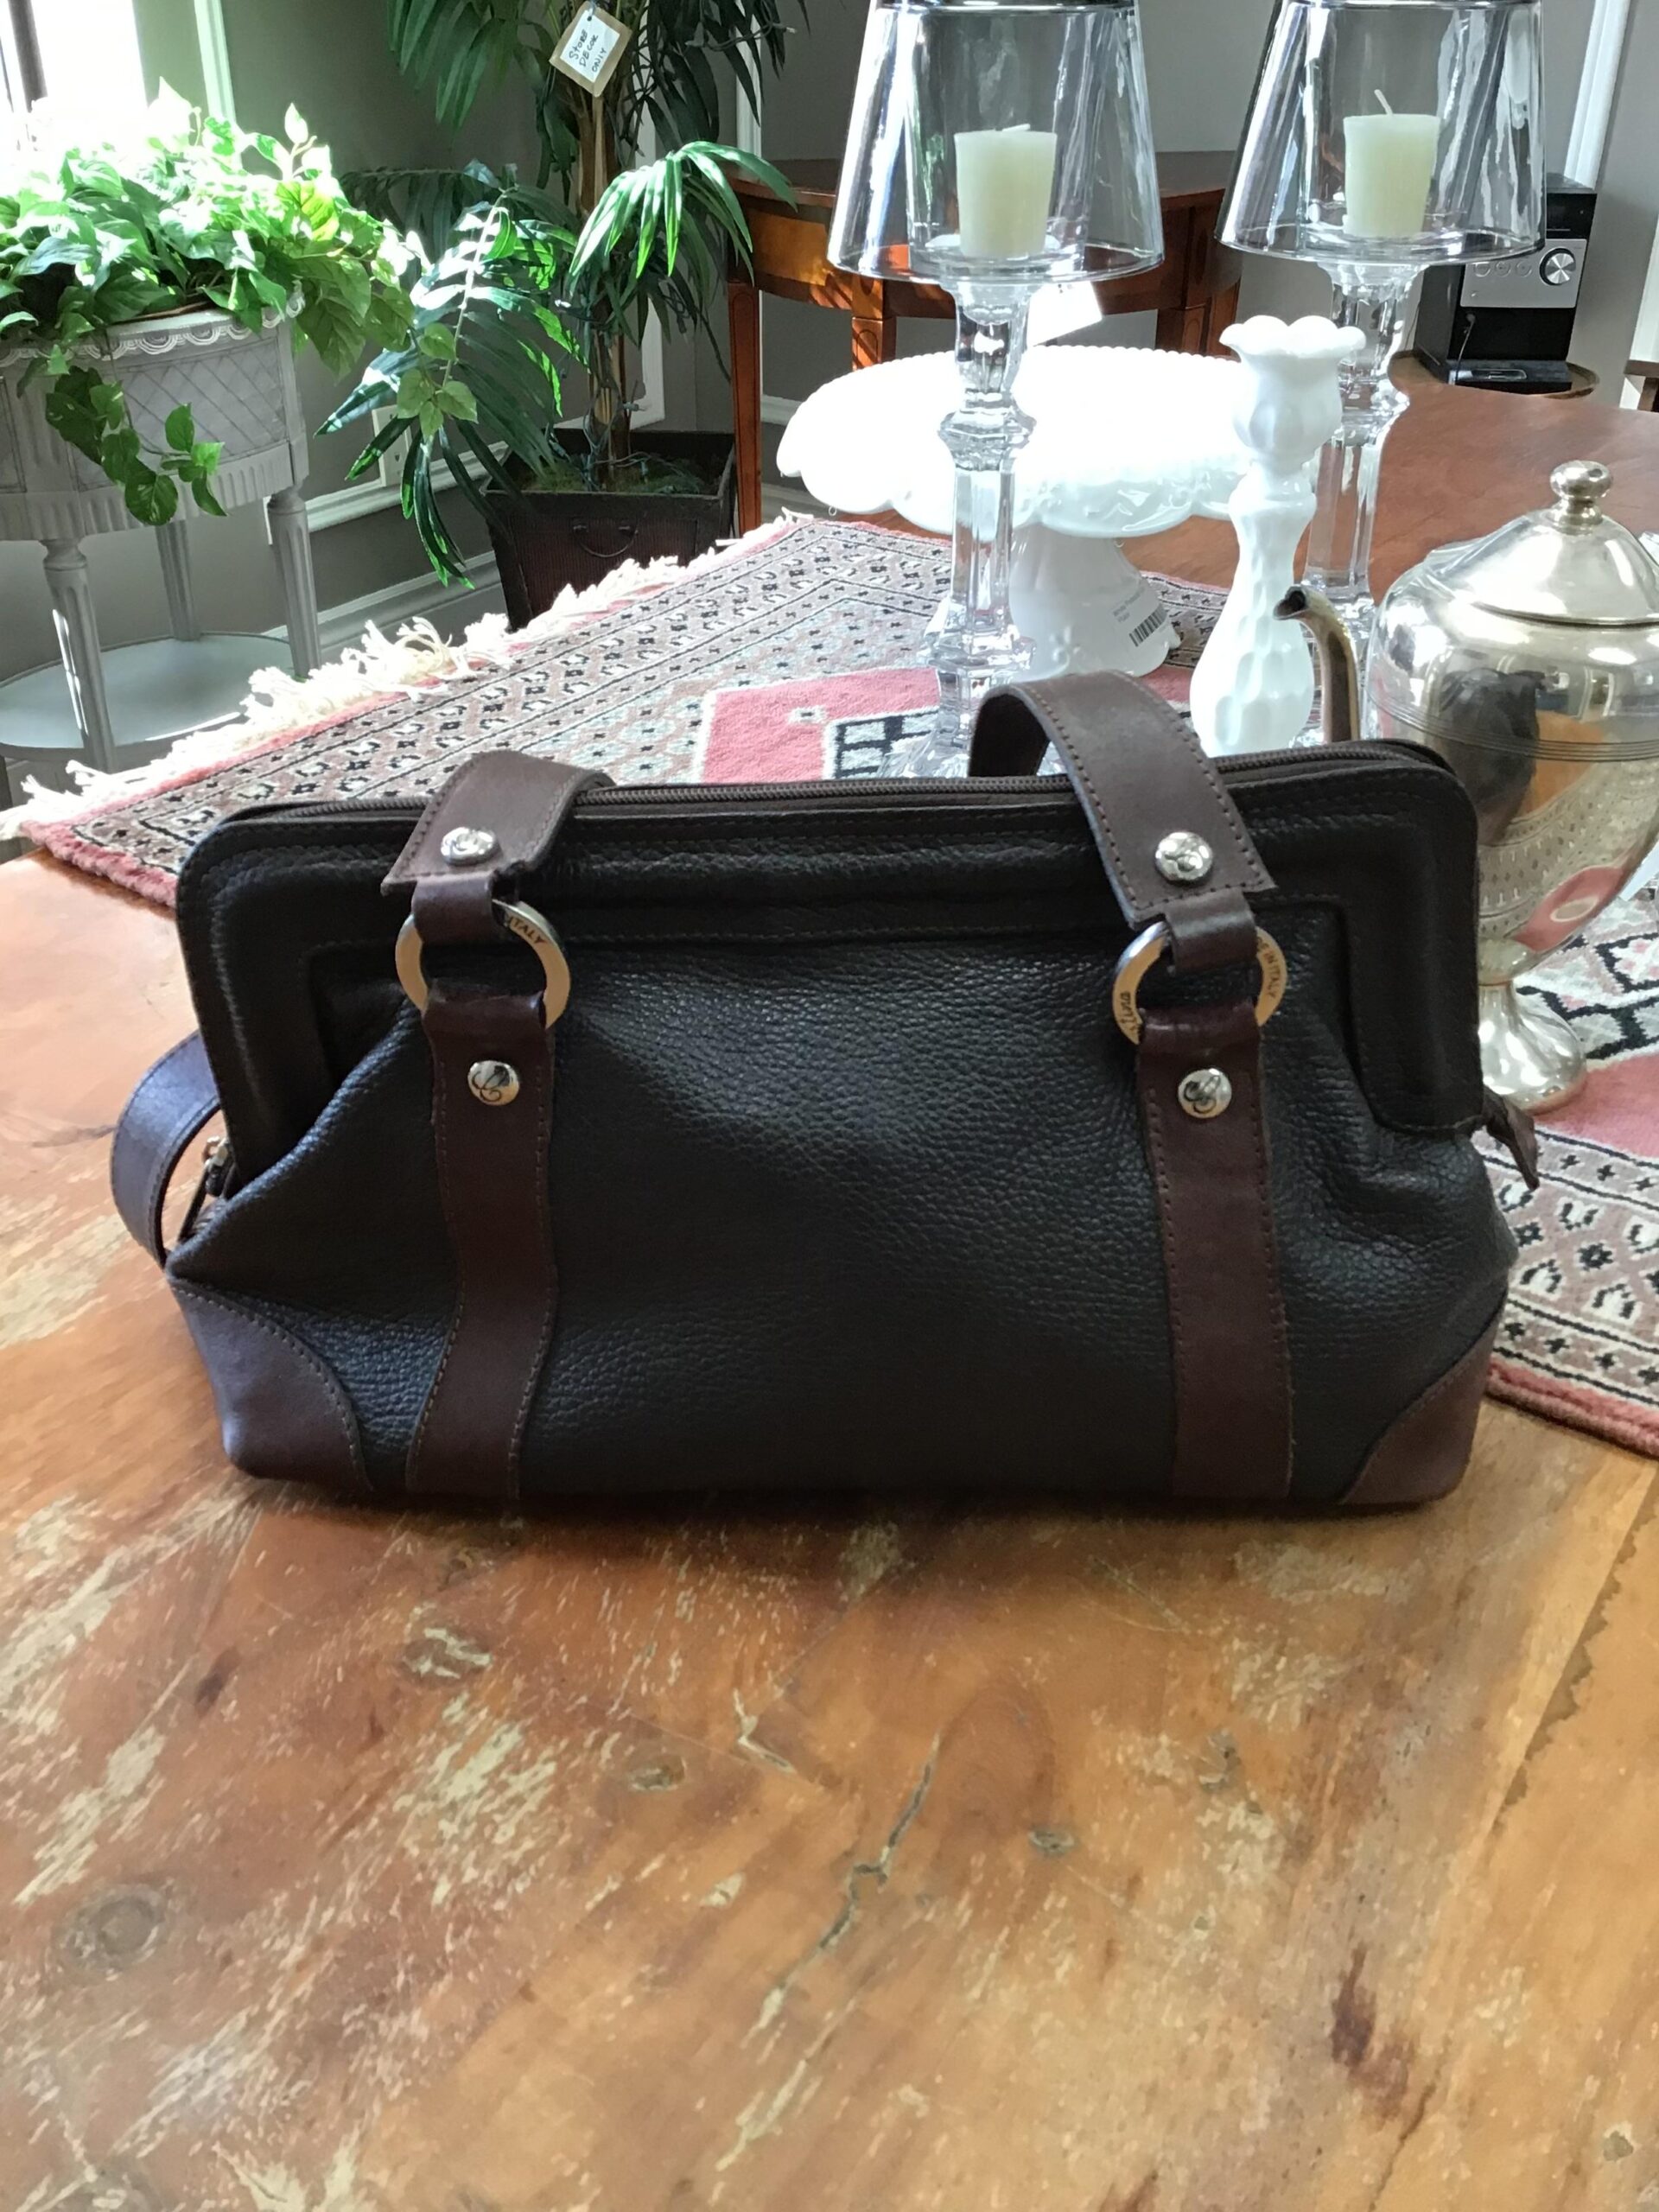 PELL ITALY Brown Pebble Leather Handbag